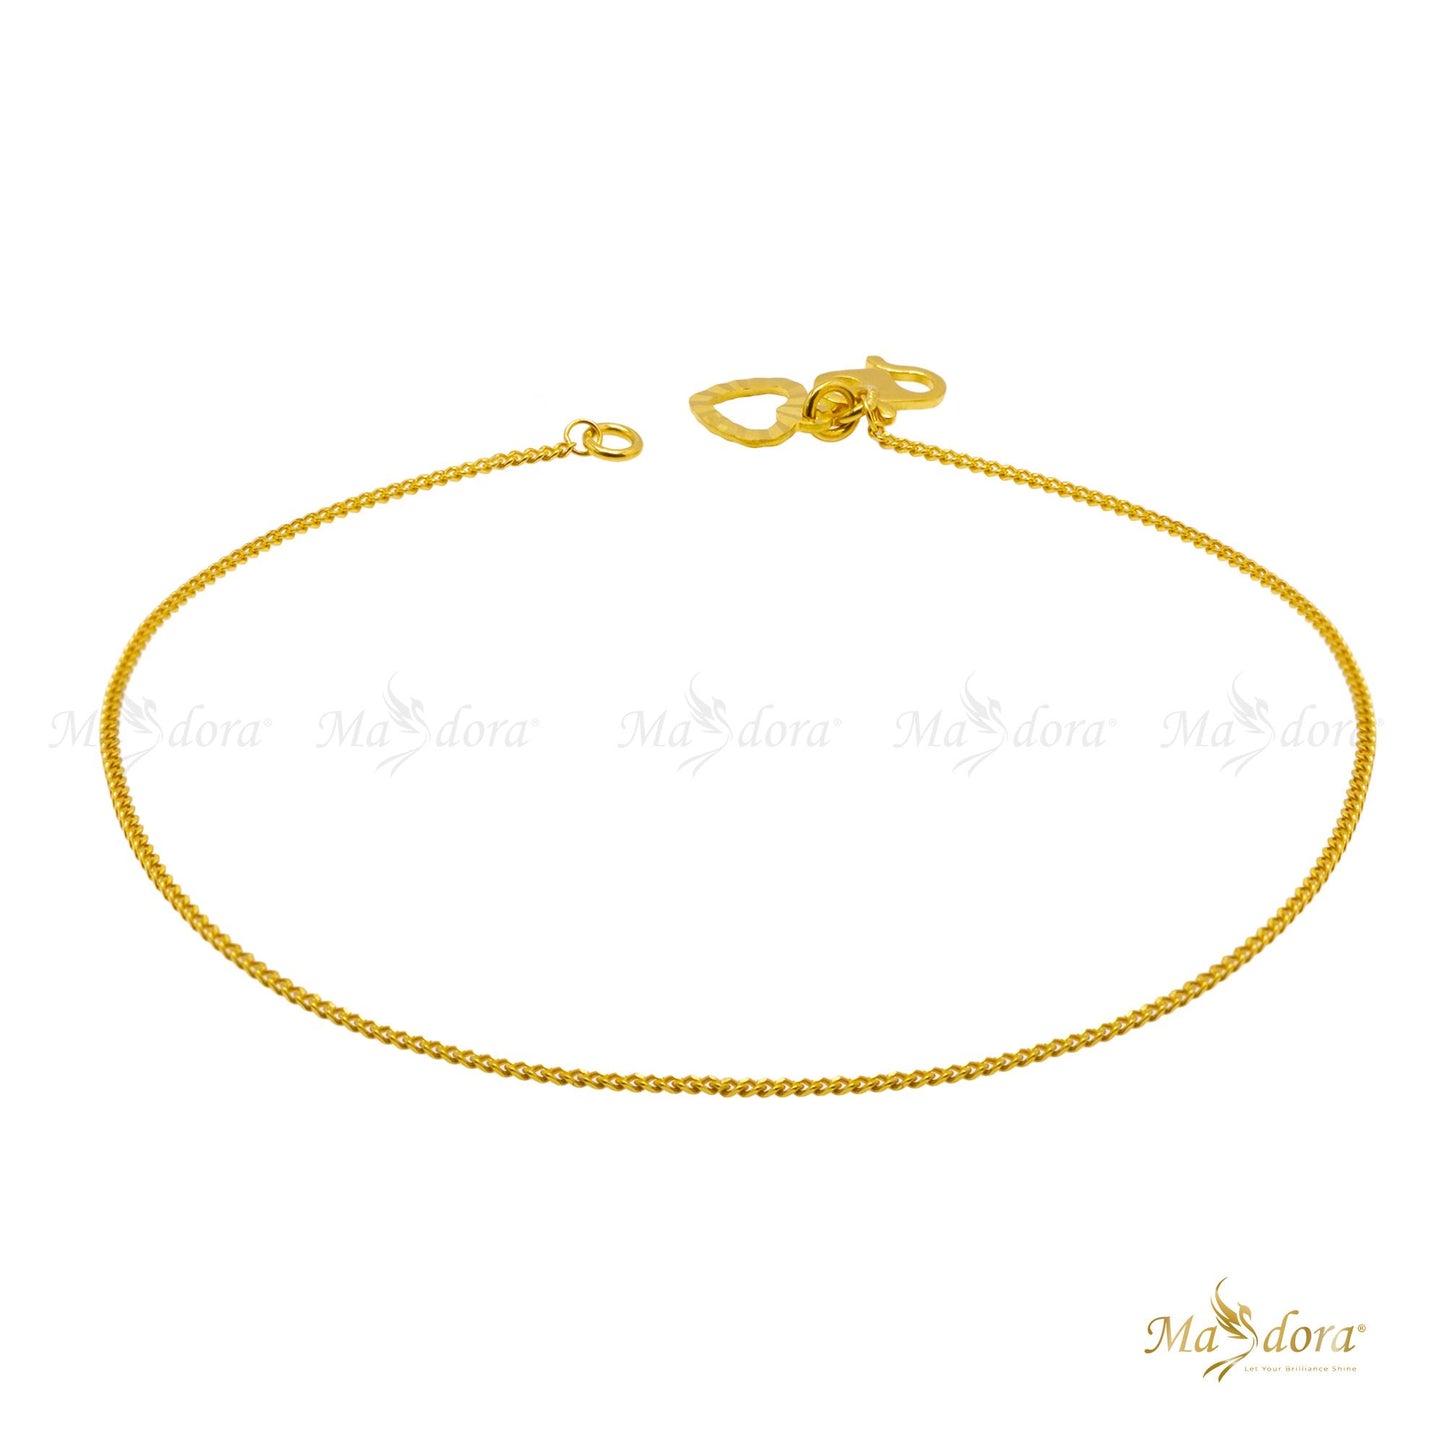 Masdora Curb Chain (with Love)